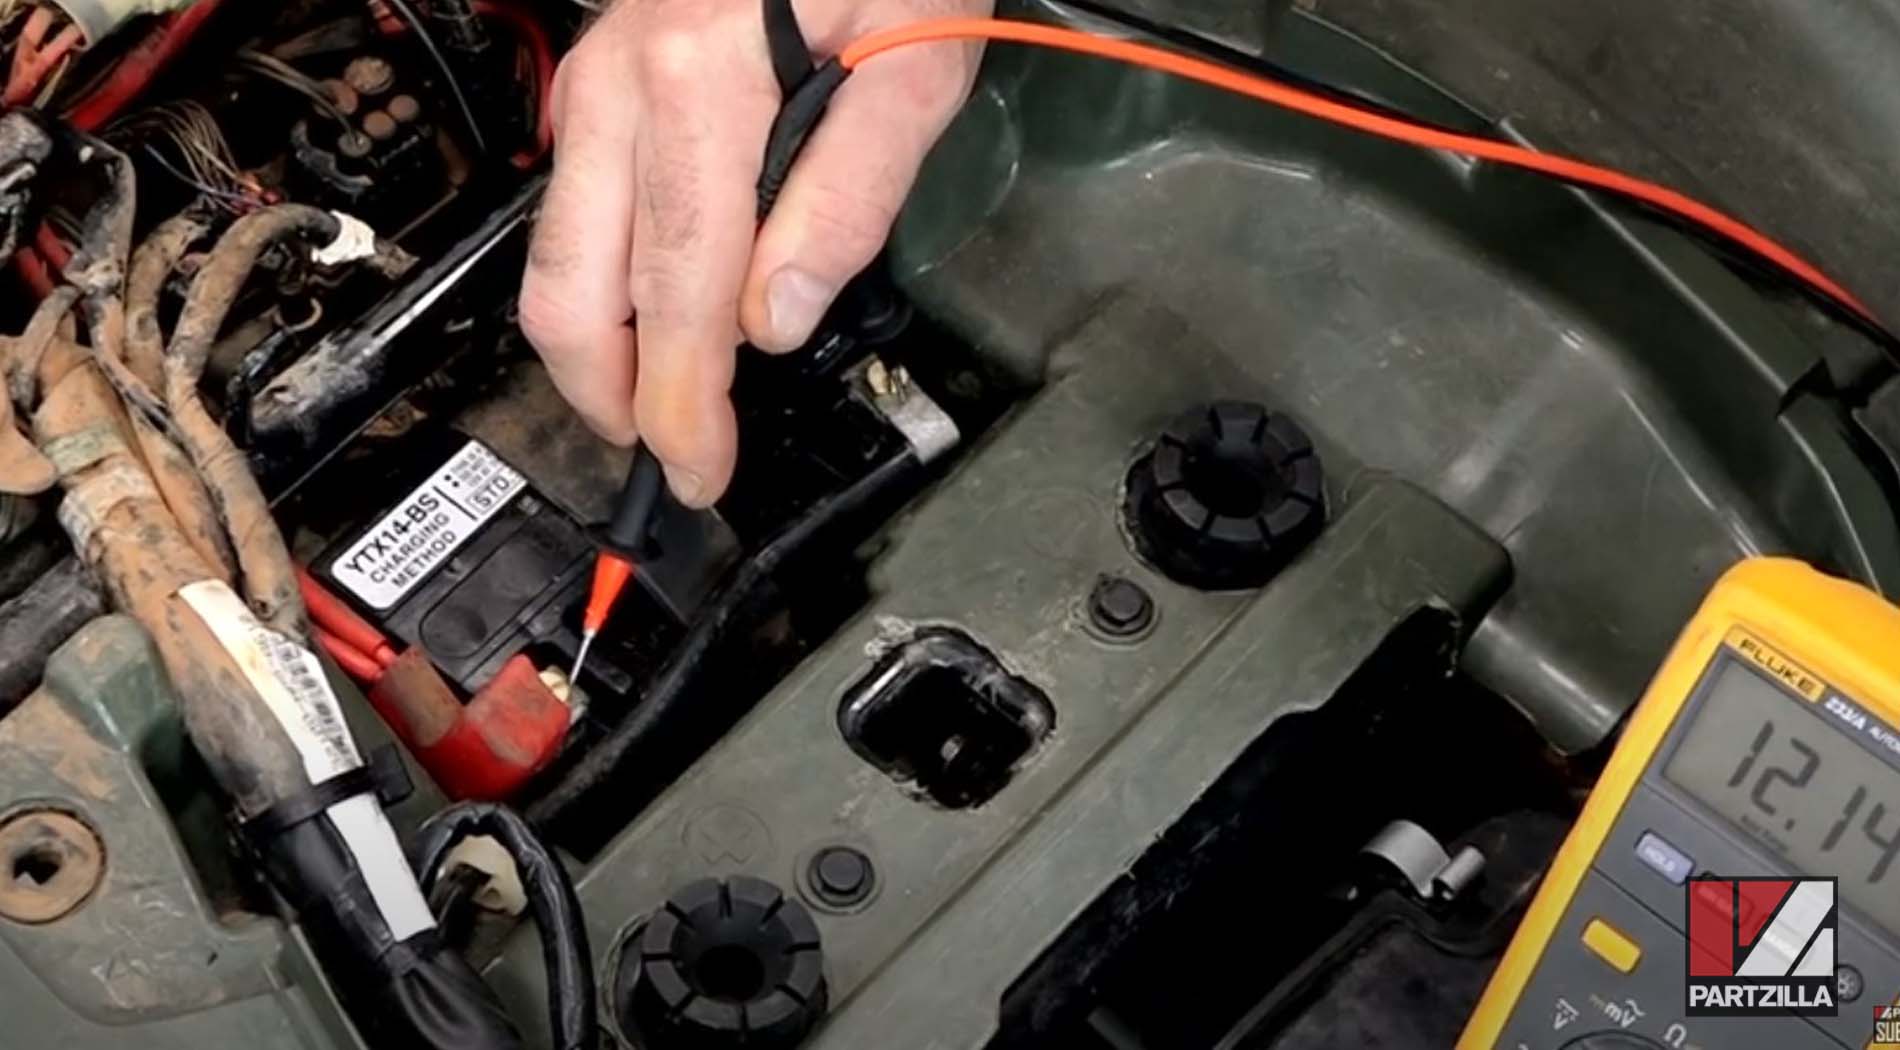 Honda Rancher 420 battery test